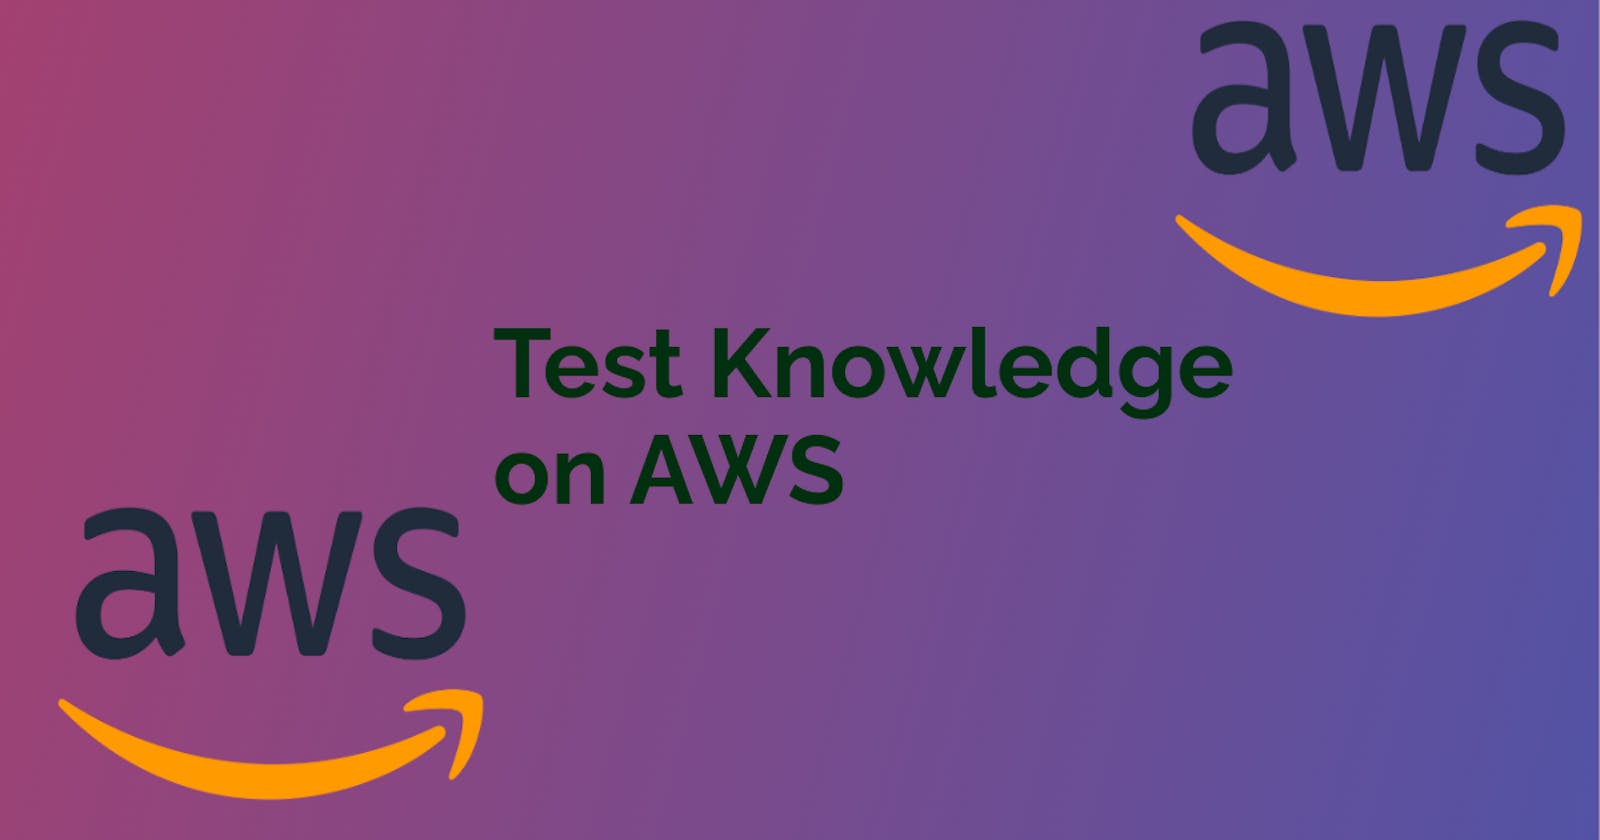 Test Knowledge on aws